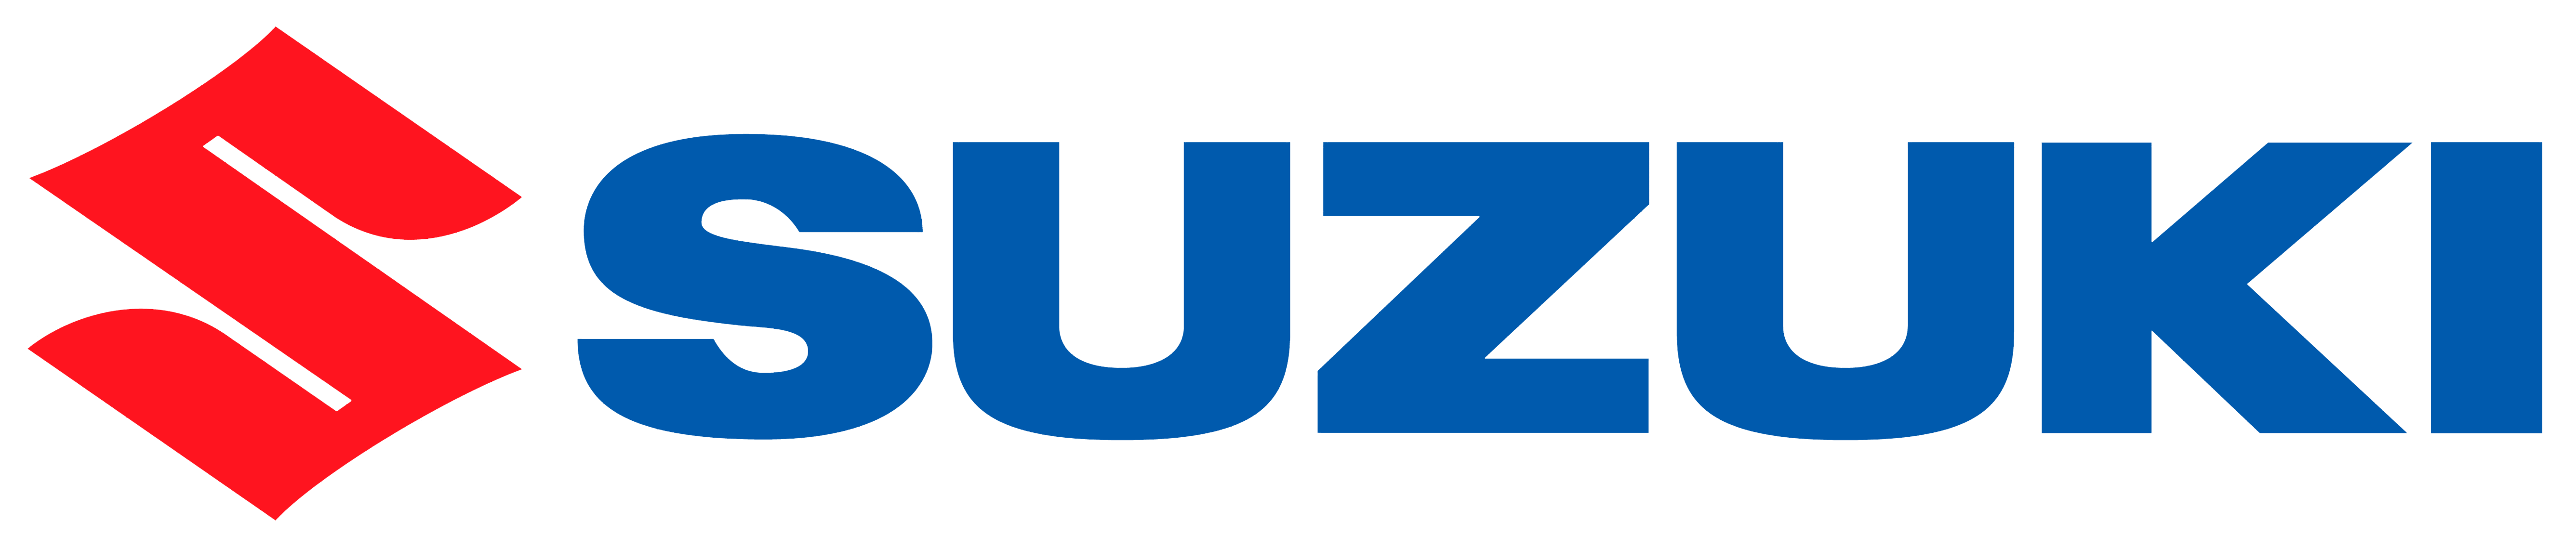  Suzuki  motorcycle logo  history and Meaning bike emblem